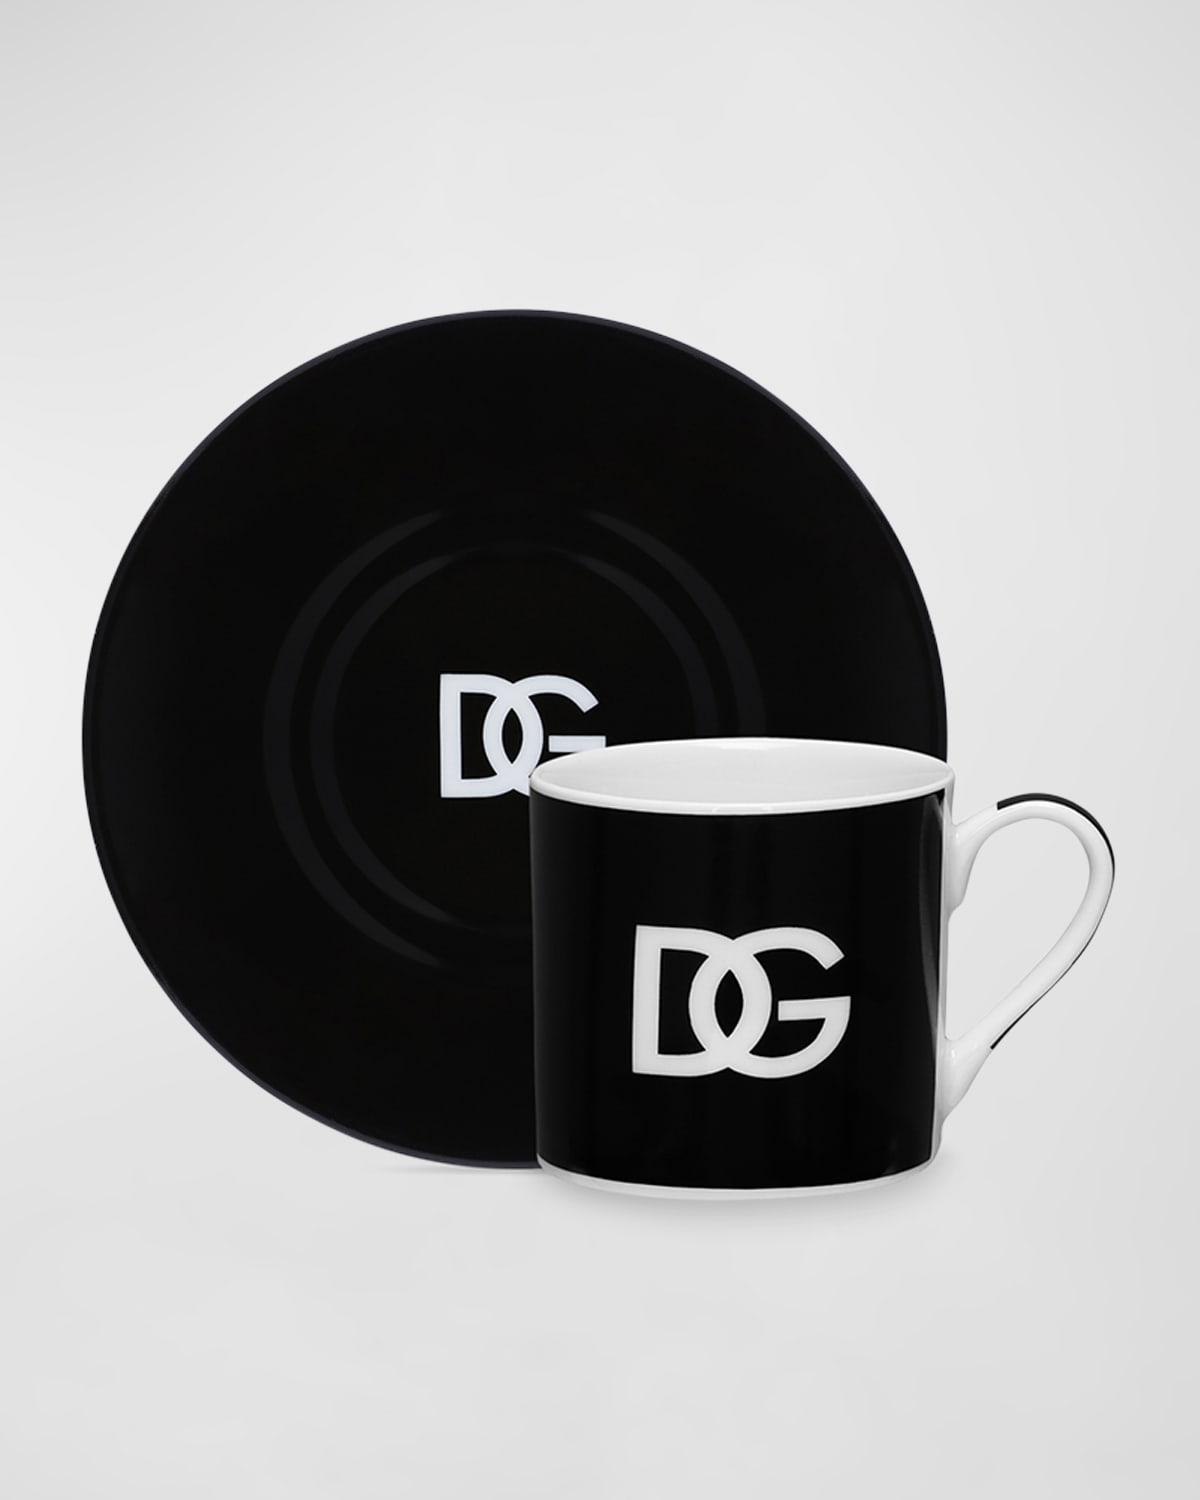 Dolce&Gabbana Casa DG Logo Espresso Cup and Saucer, Set of 2, Drinkware & Barware Coffee Mugs